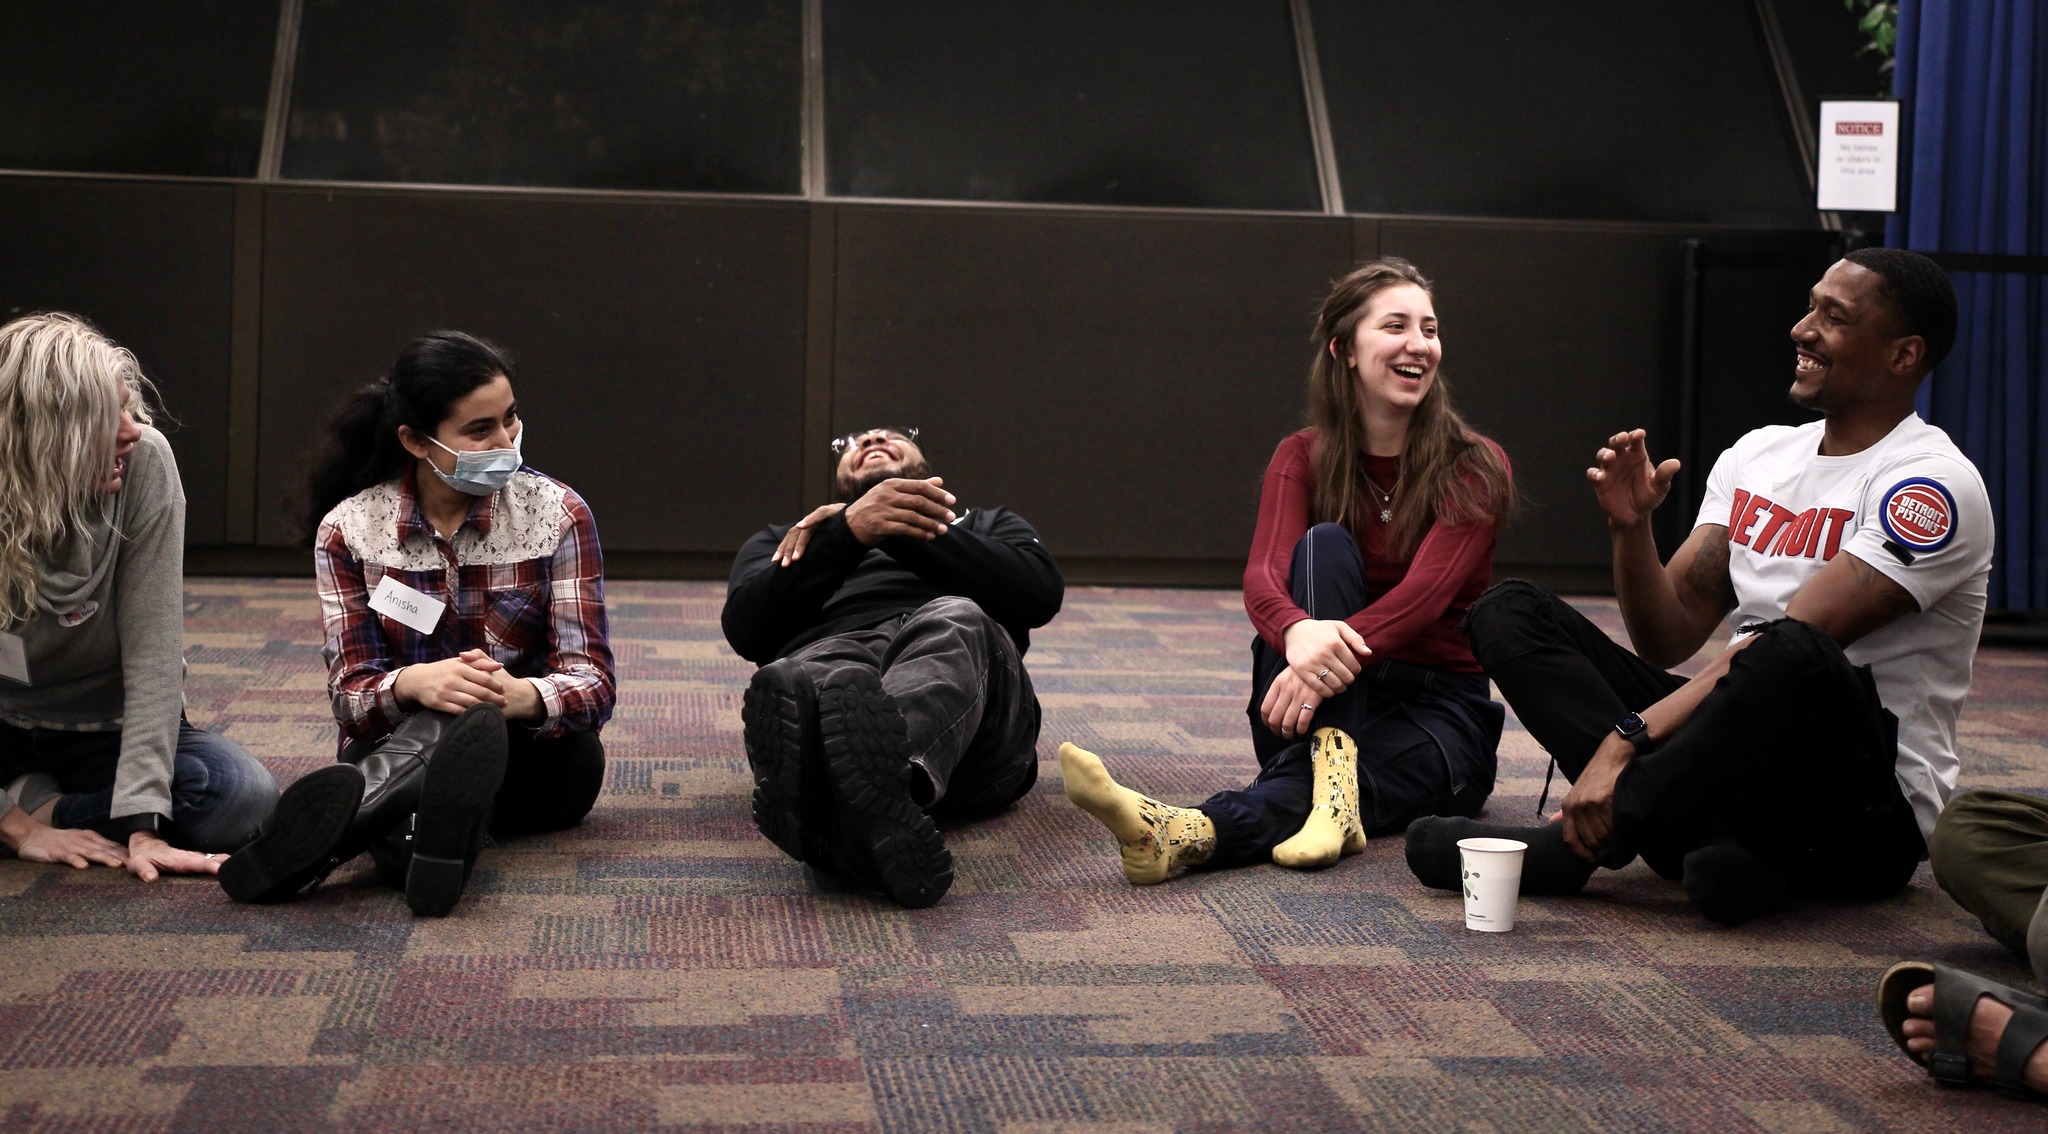 Workshop participants laugh during an icebreaker.